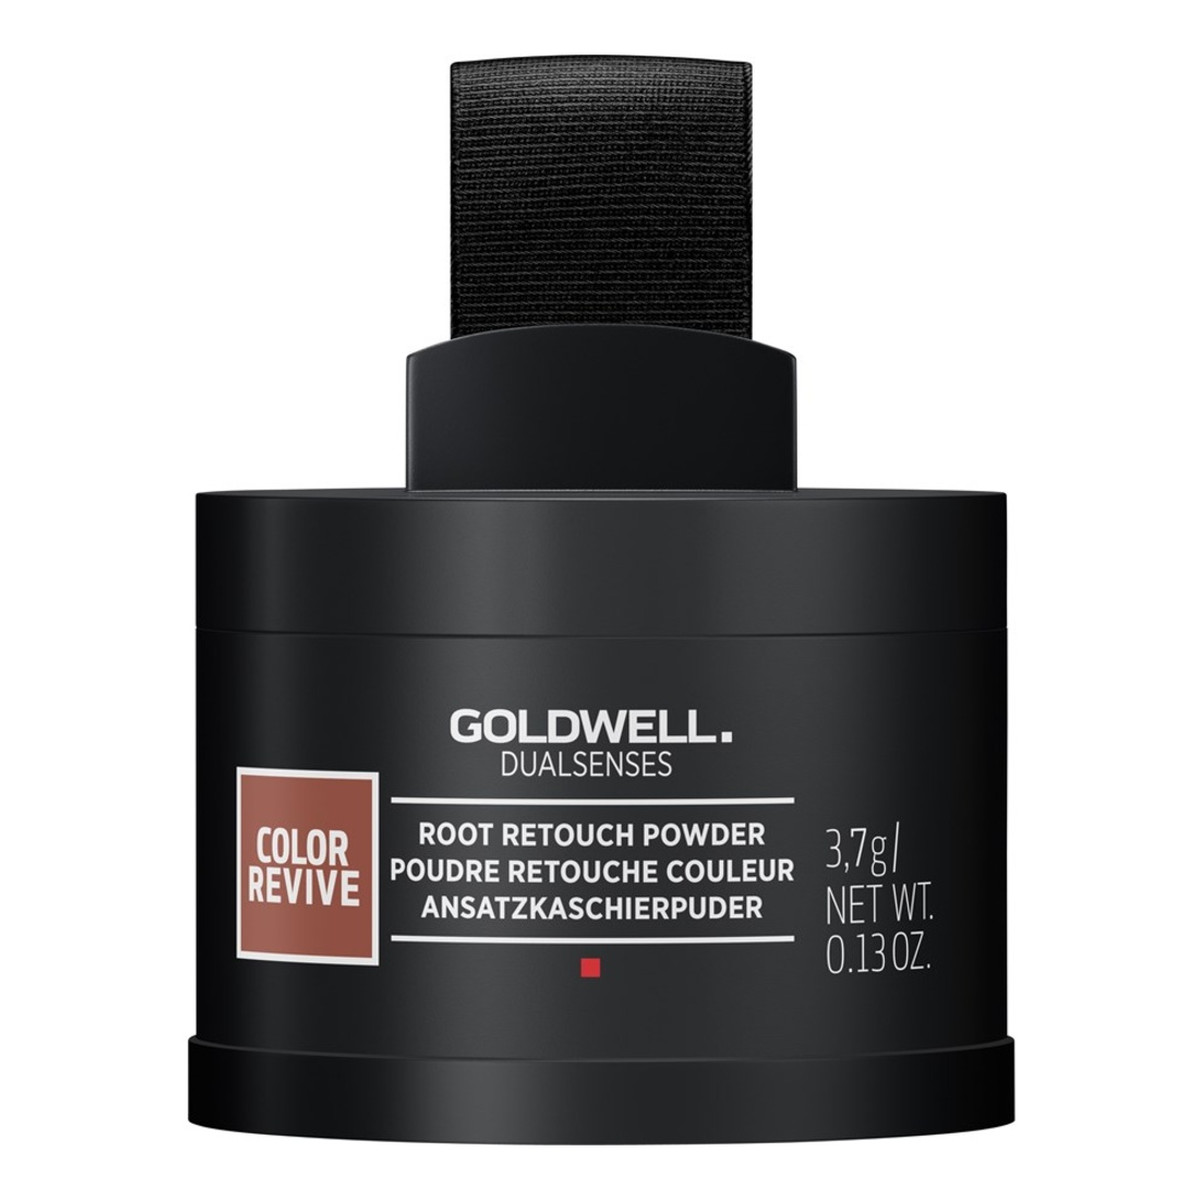 Goldwell Dualsenses Colour Revive Root Retouch Powder puder maskujący odrost 3g